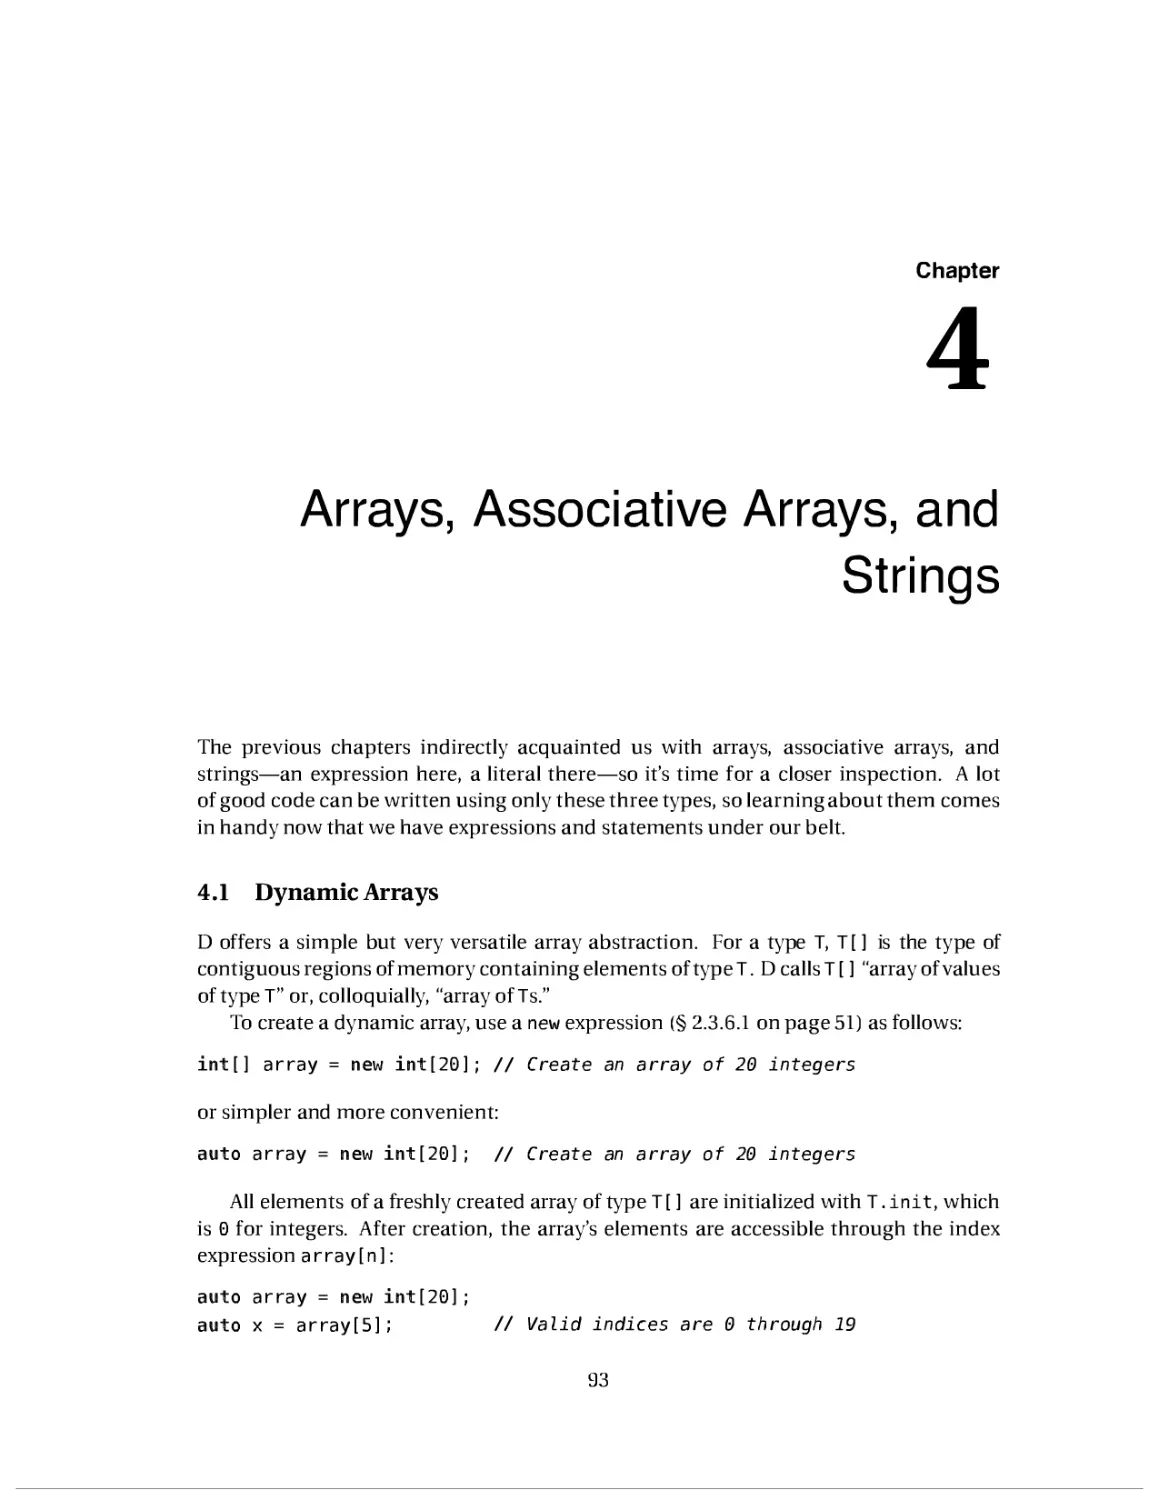 4. Arrays, Associative Arrays, and Strings